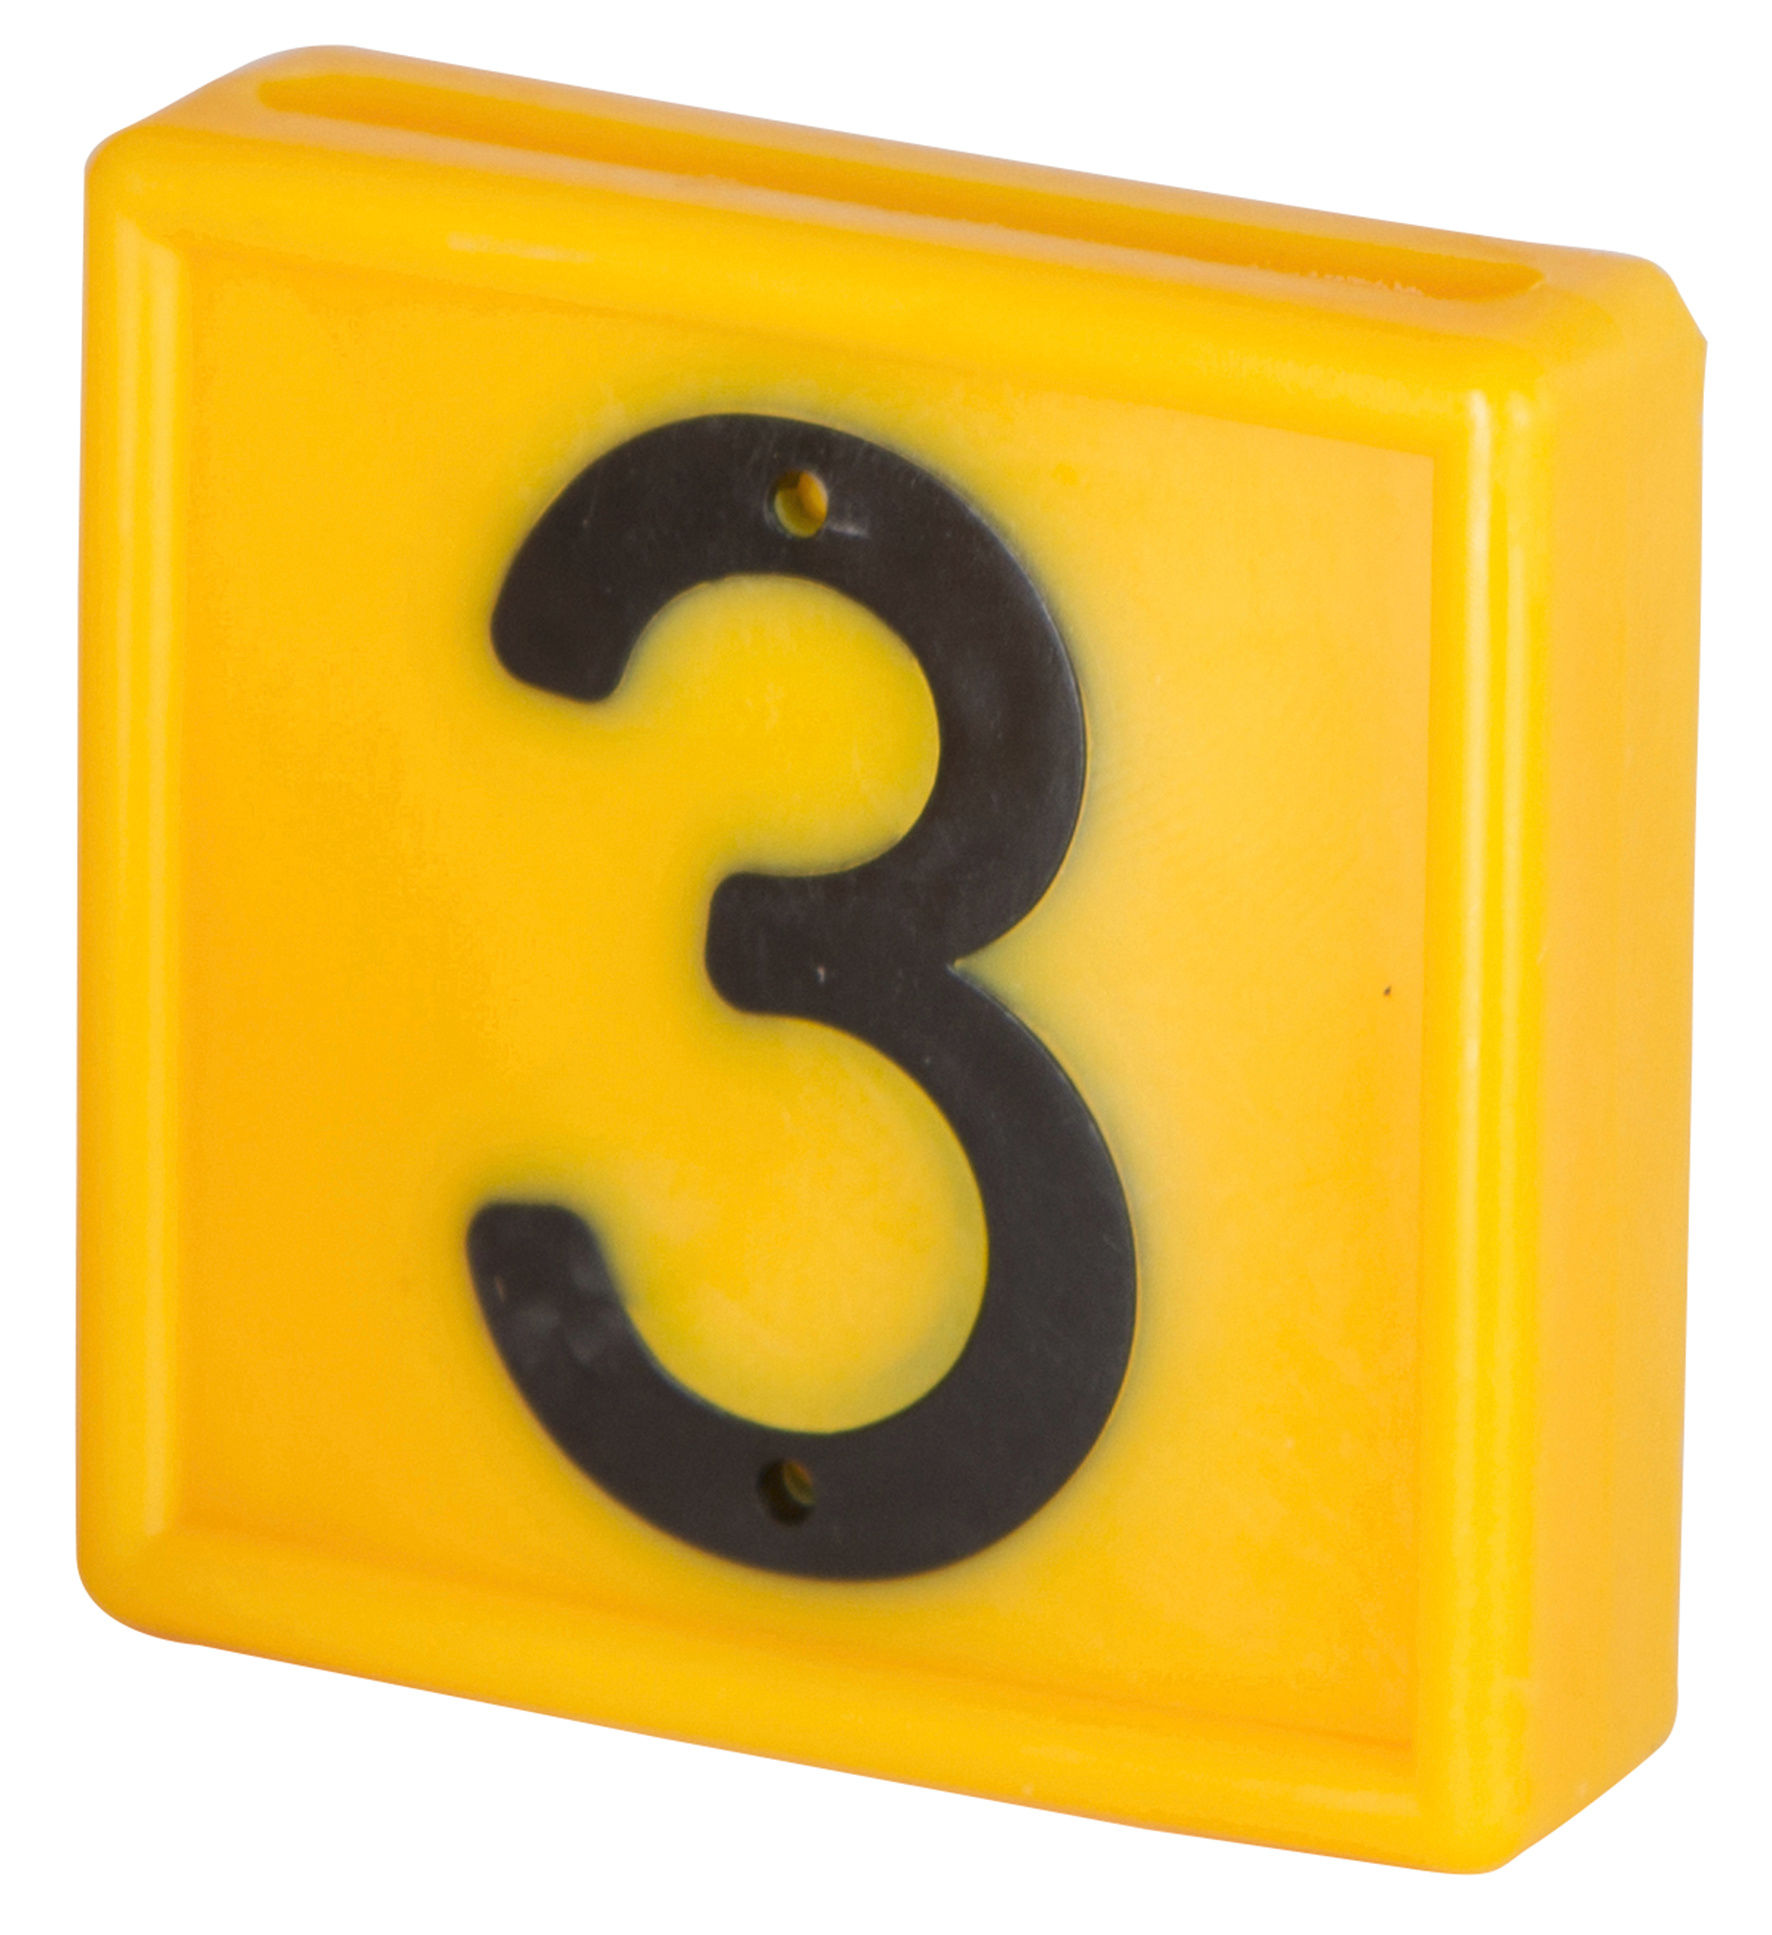 Nummernblock Nr. 3, gelb, einstellig, 44 x 46 mm